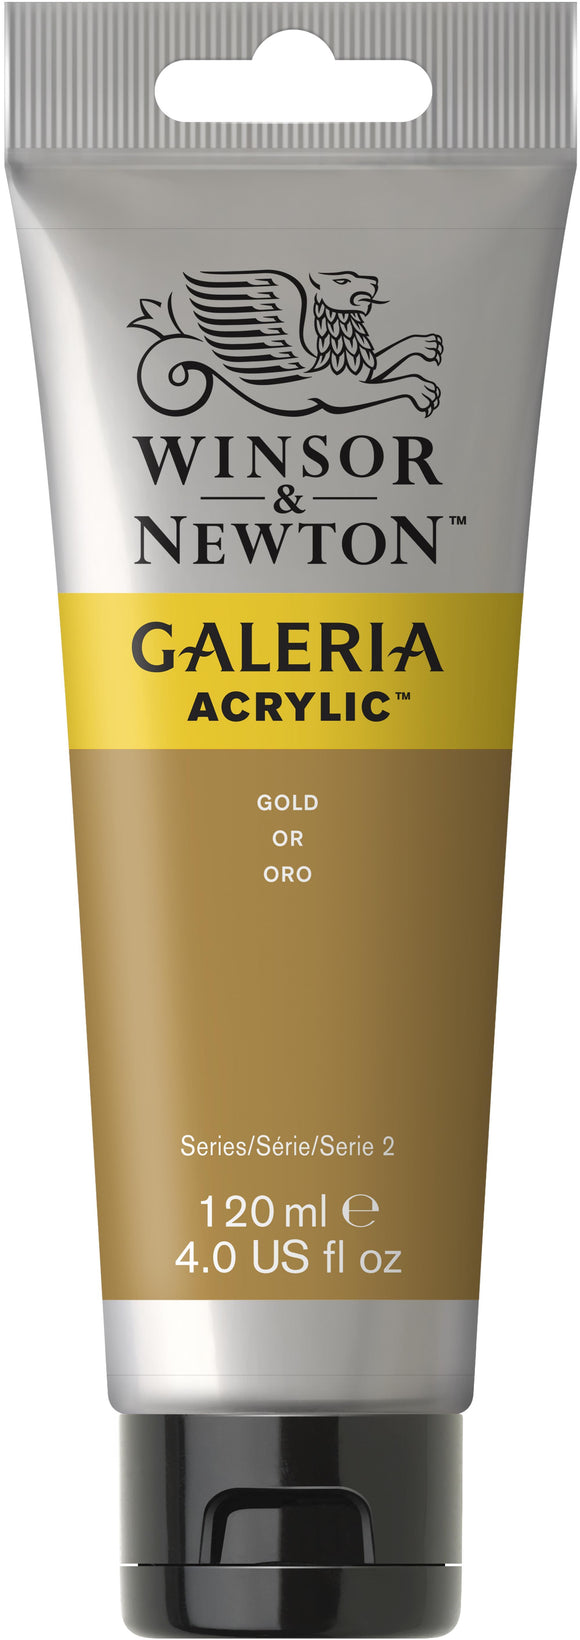 Winsor & Newton Galeria Acrylic Gold 120Ml